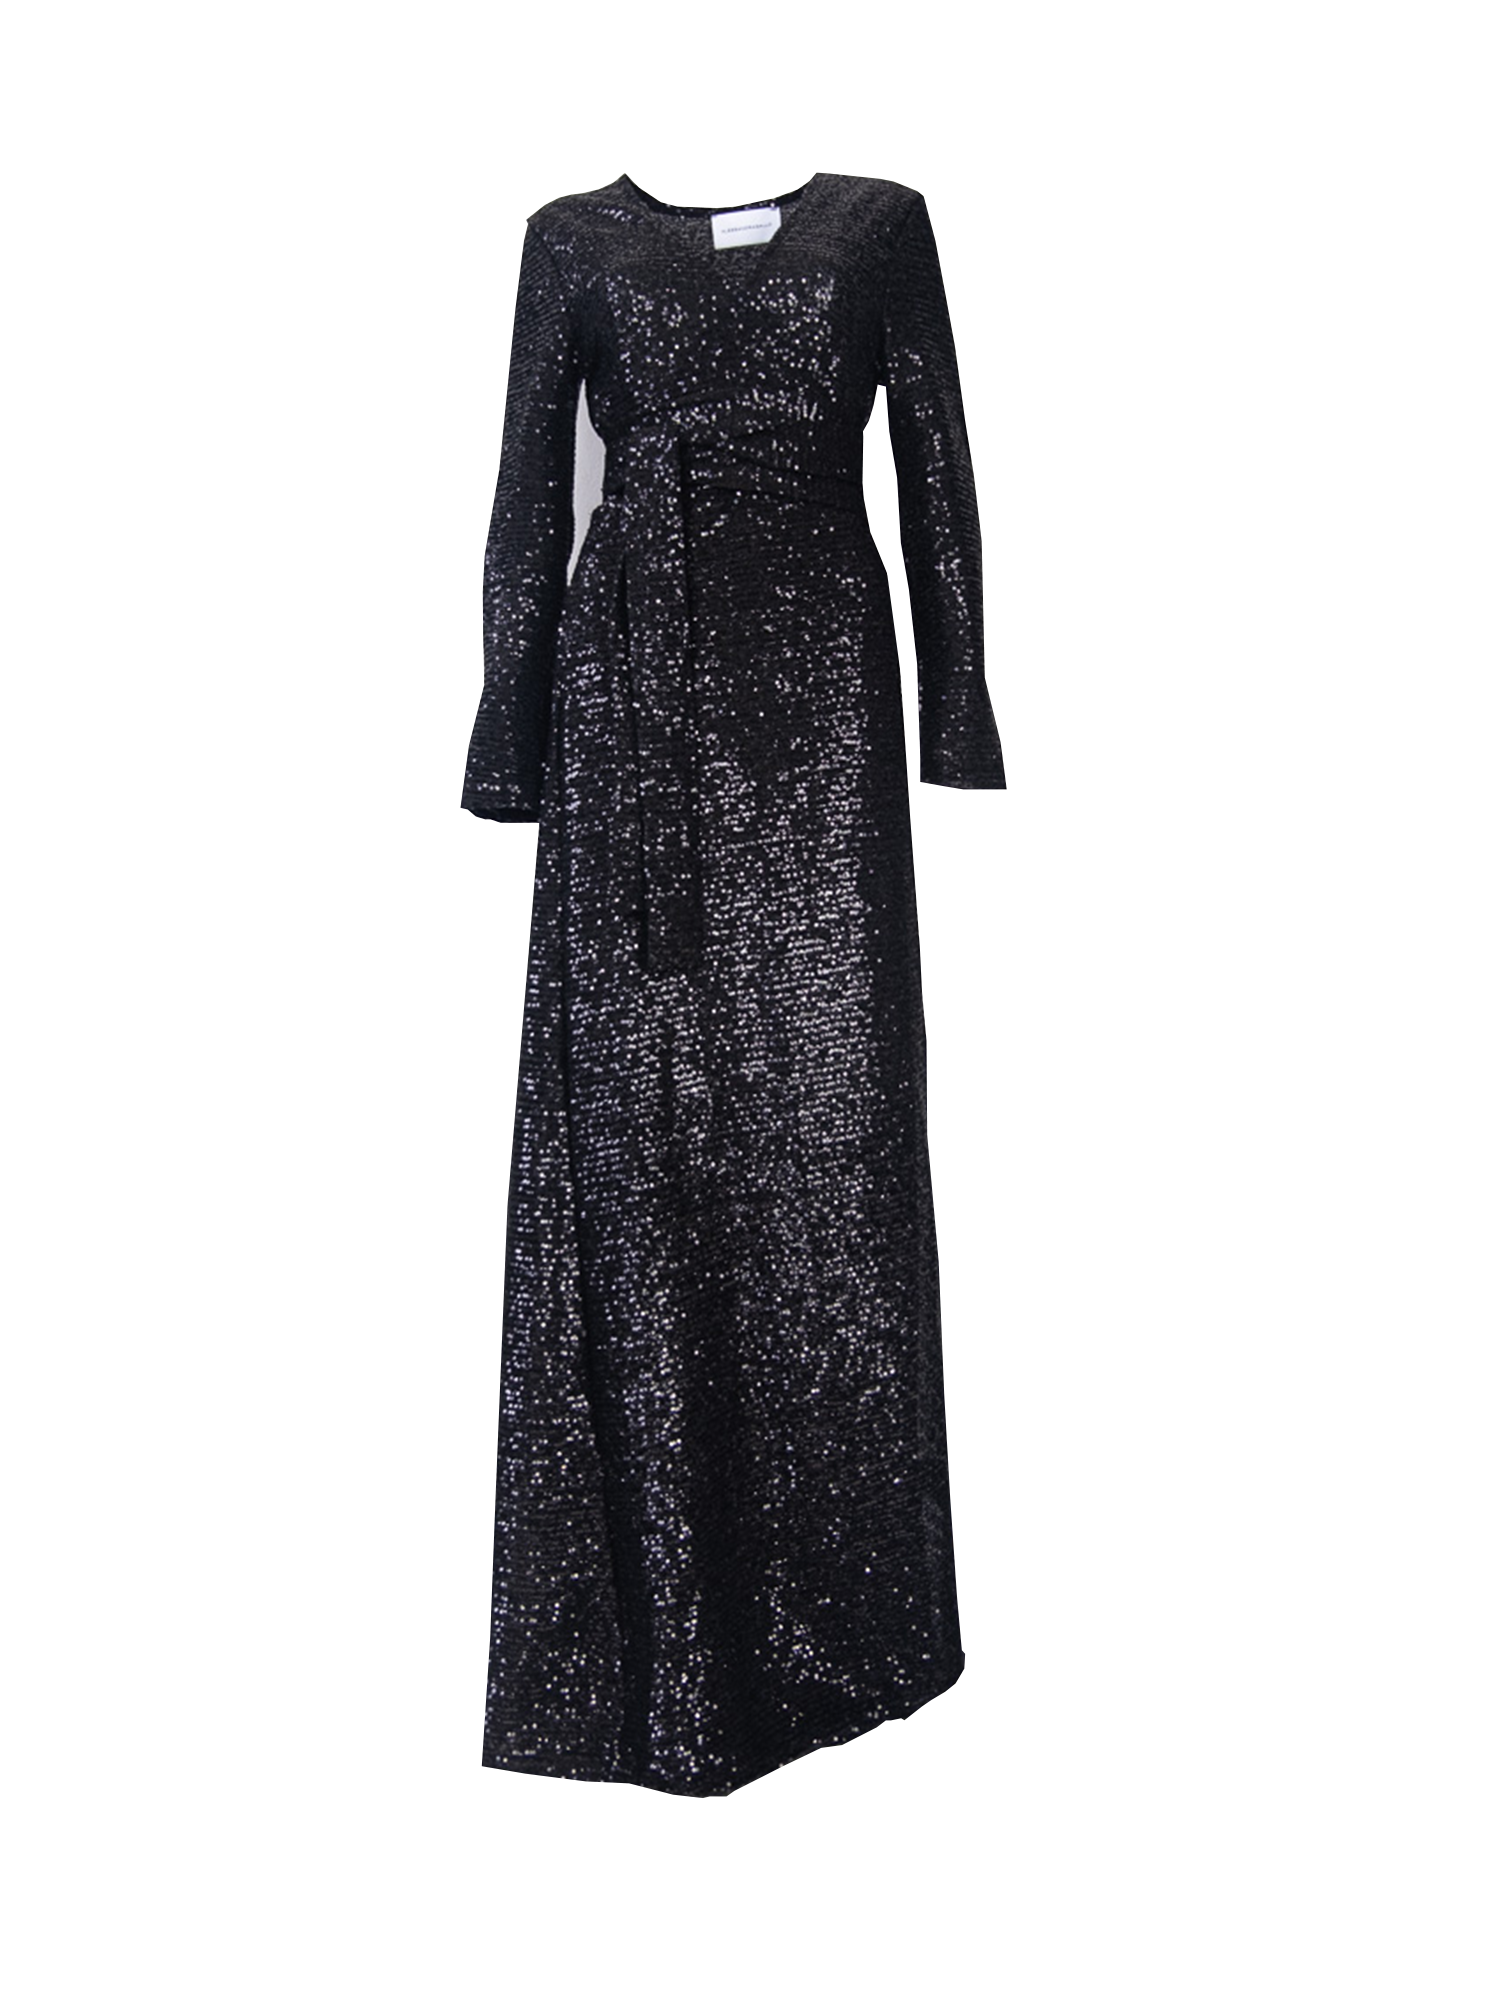 LETIZIA - long dress in black pailettes